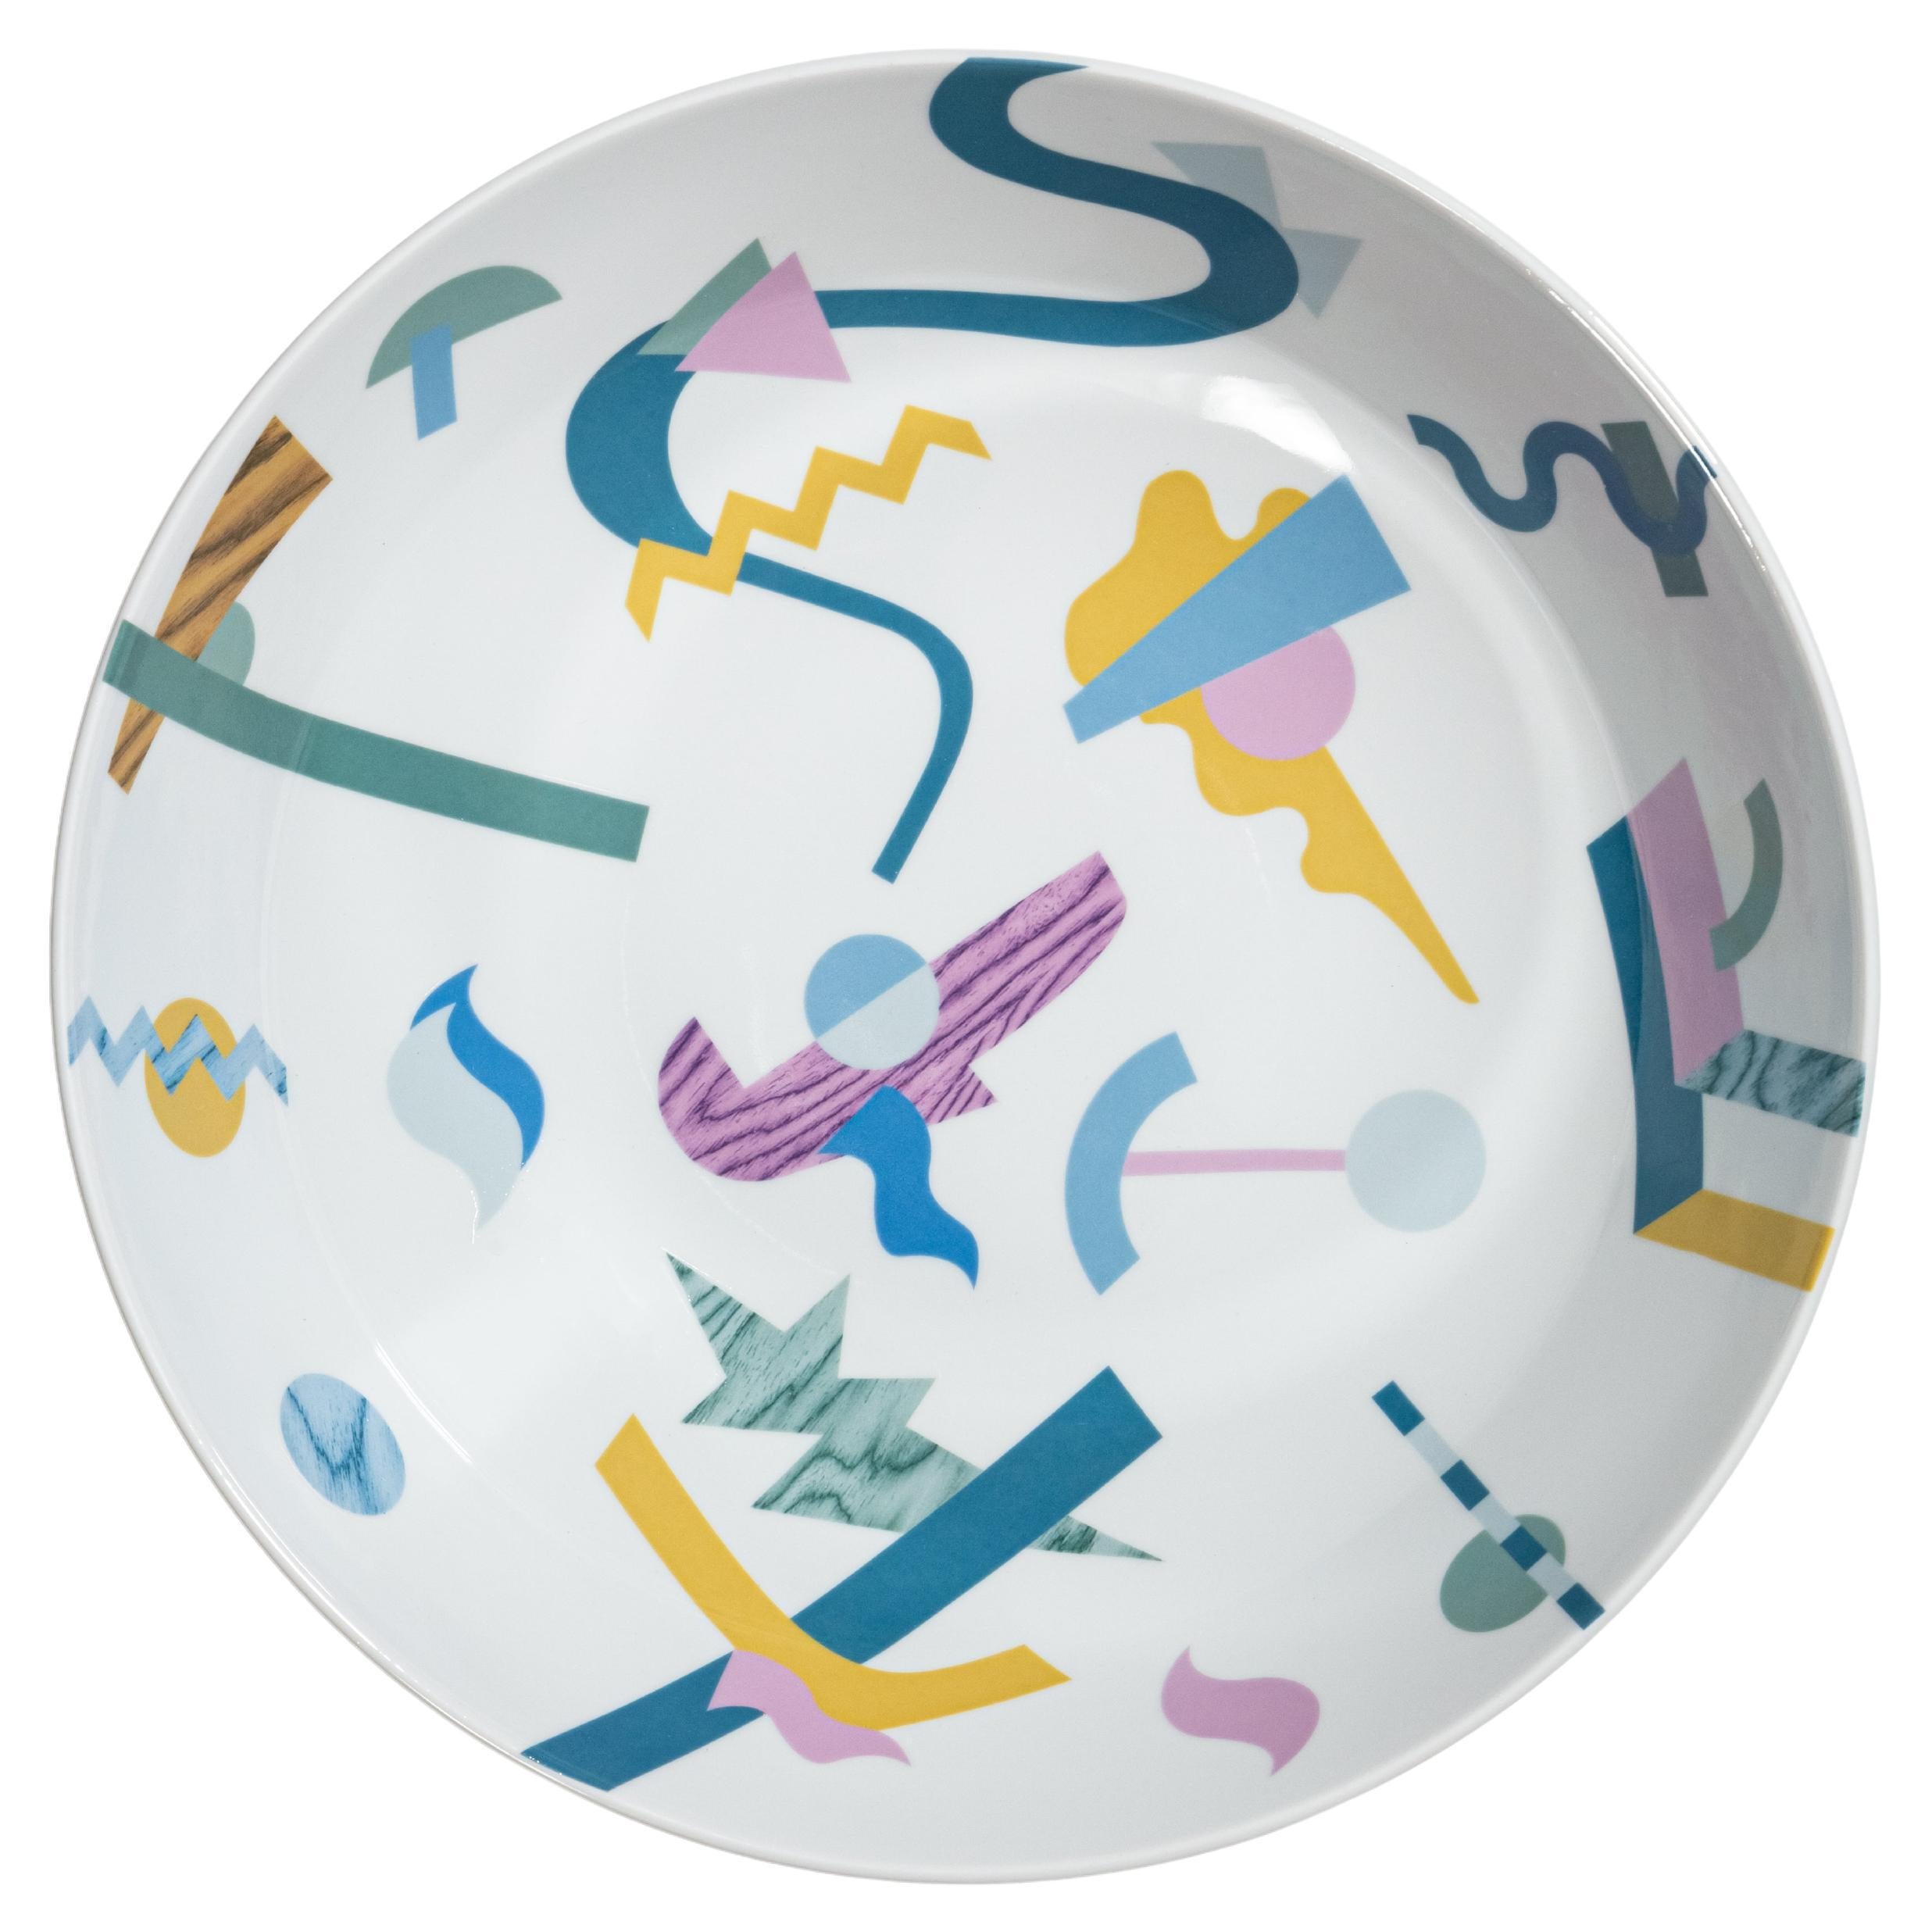 Alchimie Contemporary Decorated Porcelain Bowl Design by Vito Nesta 